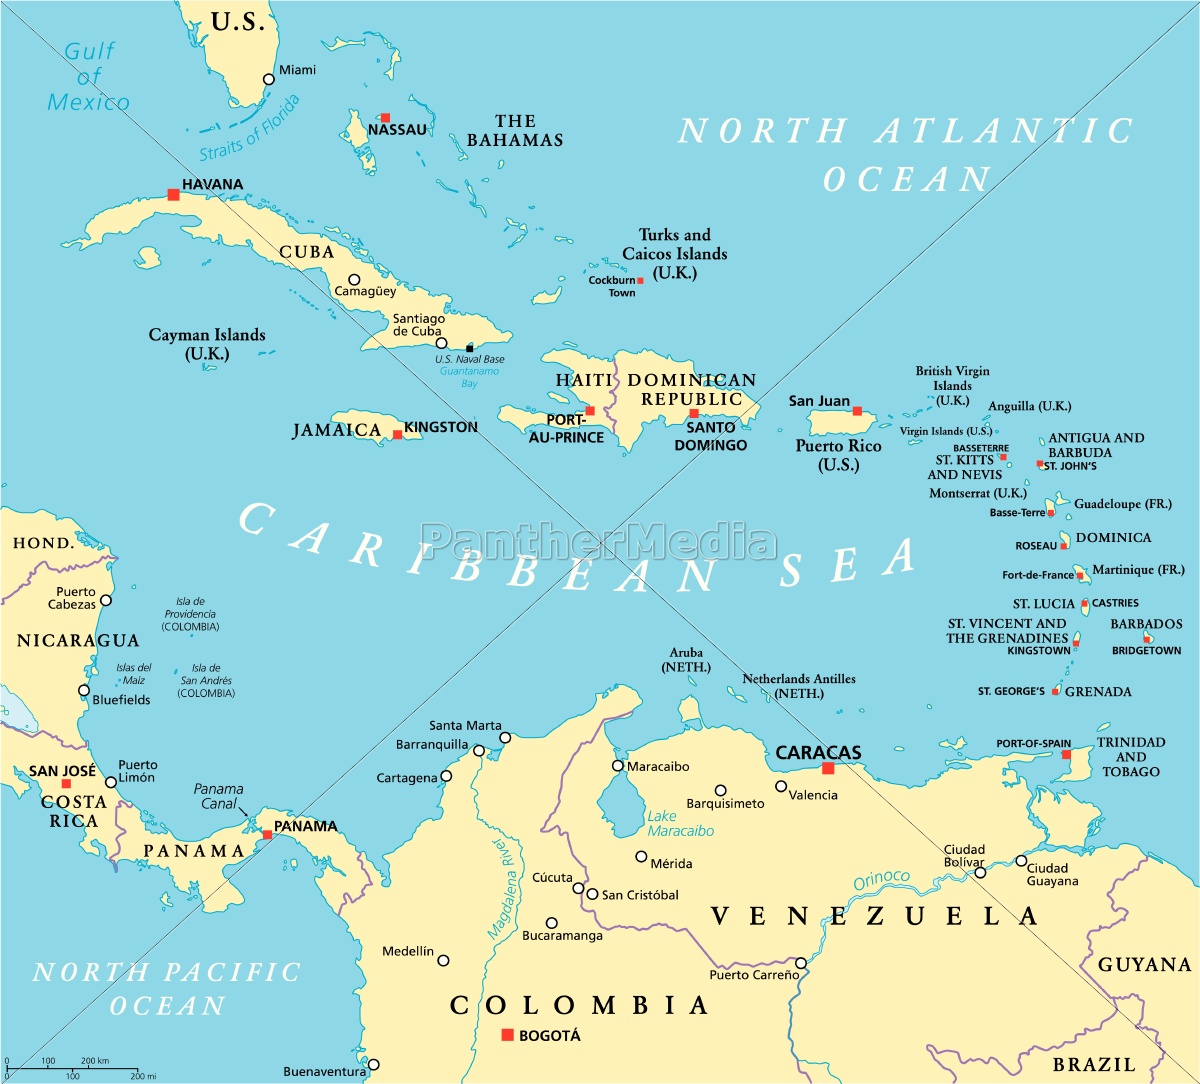 karibik politische karte - Stockfoto - #14334939 | Bildagentur PantherMedia